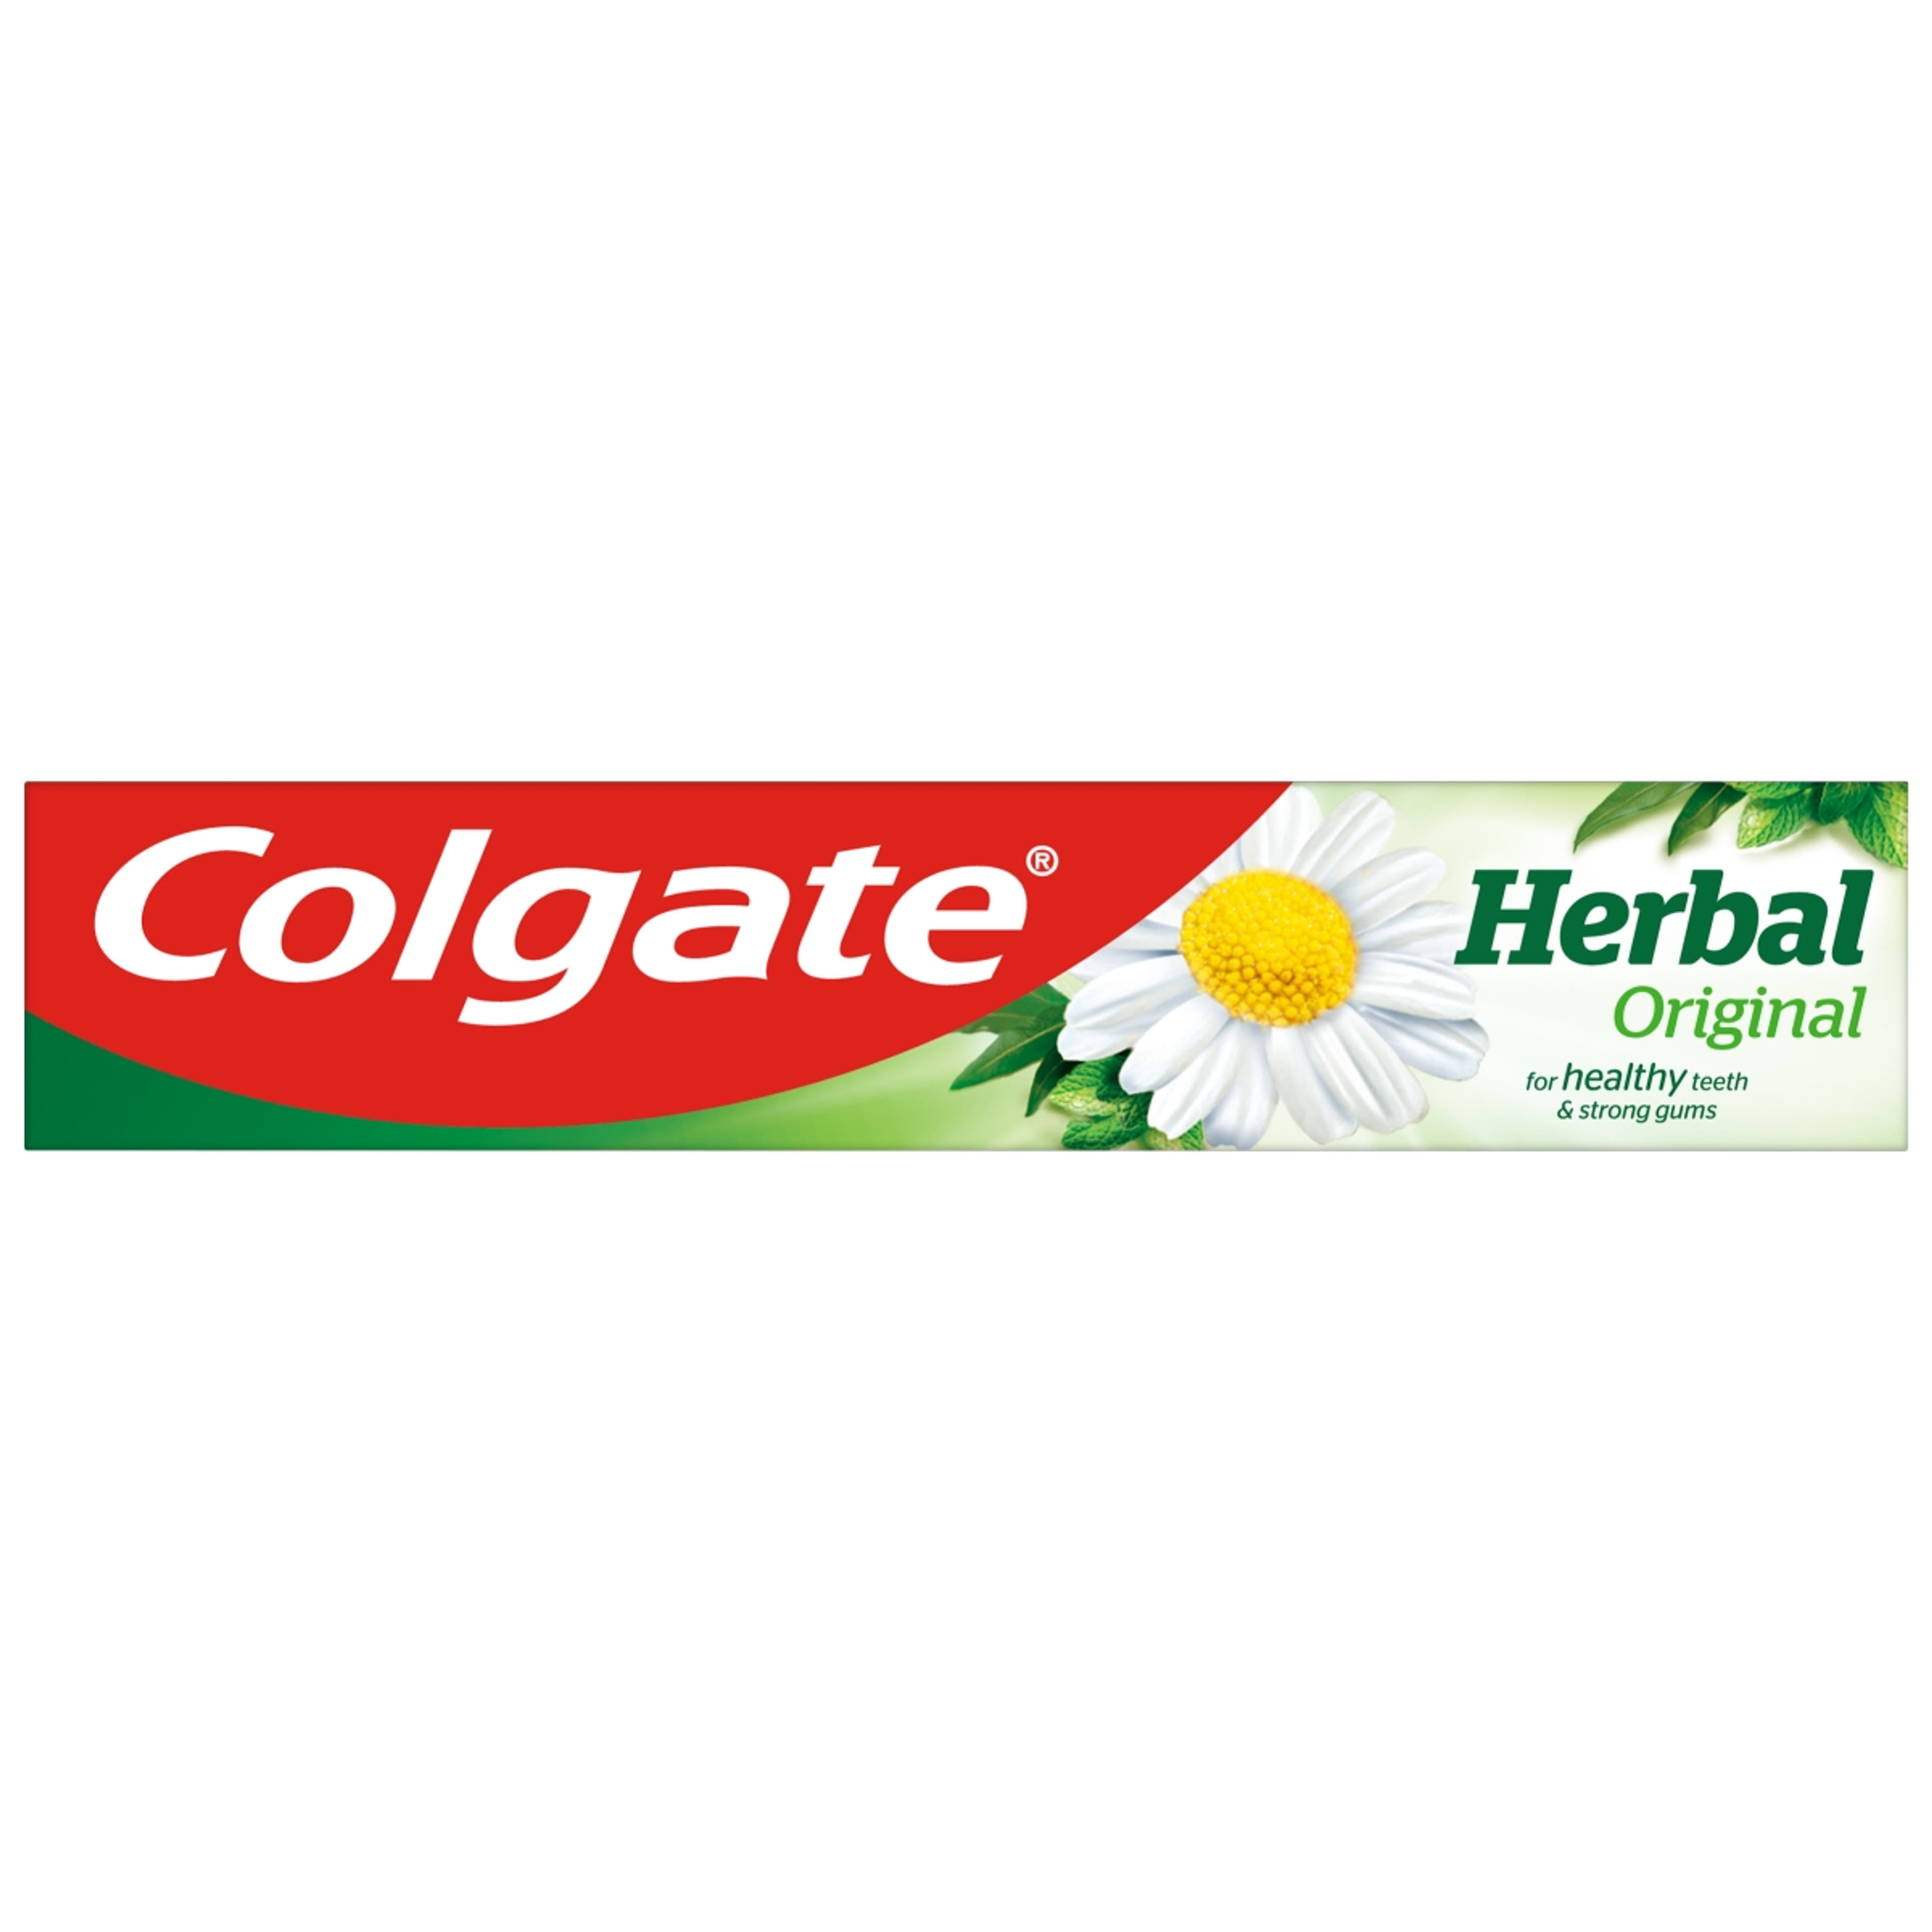 Colgate Herbal Original fogkrém - 75 ml-1